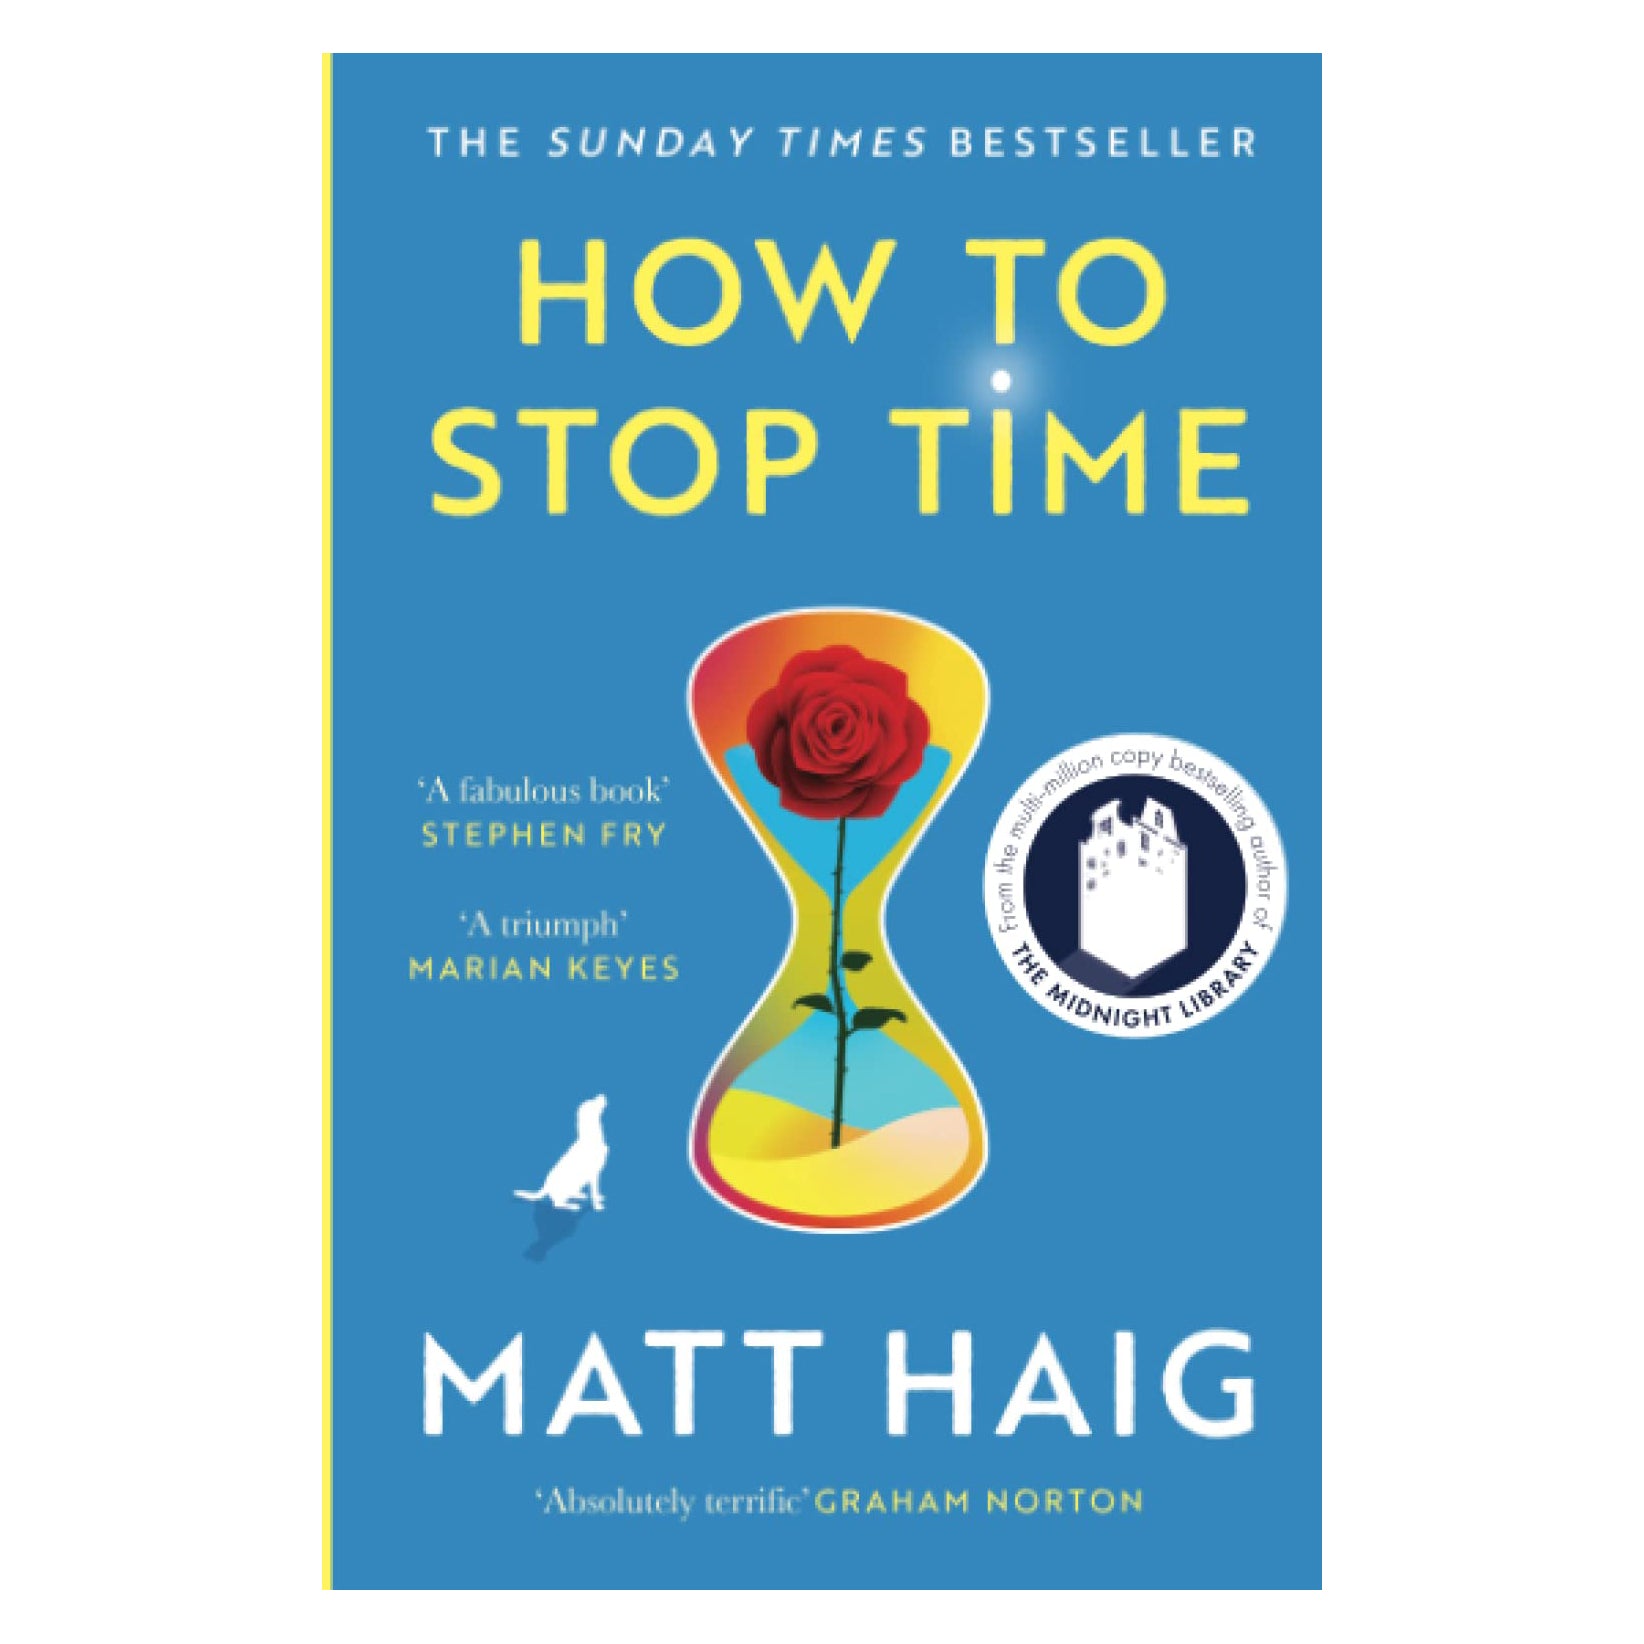 BALTIC　Stop　Haig　Shop　Time　To　How　Matt